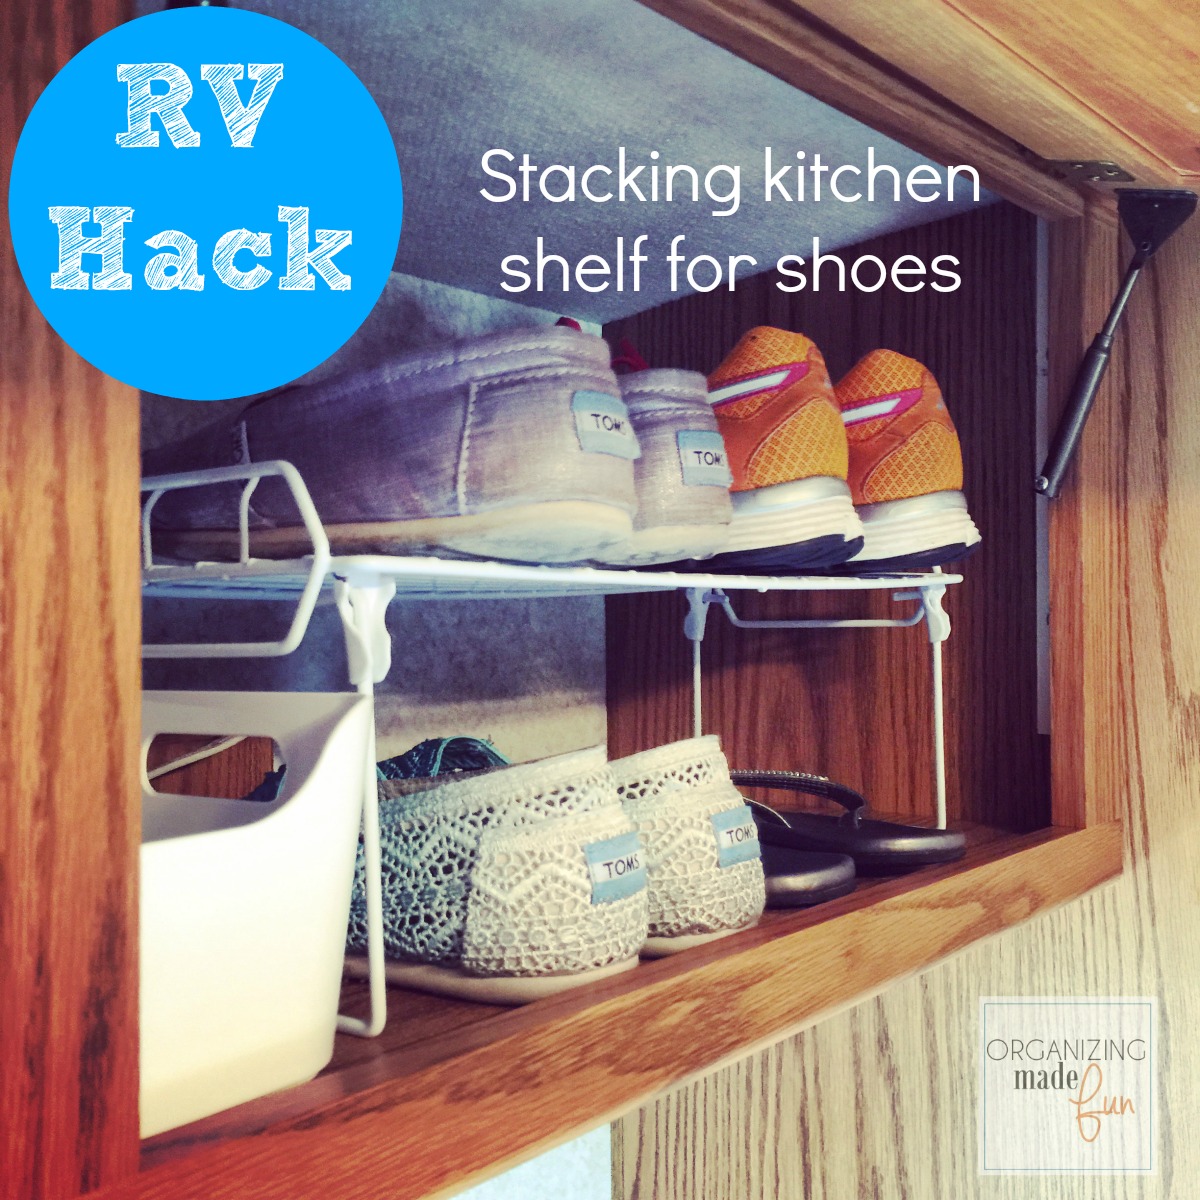 Organizing Made Fun: RV Organizing and Storage Hacks {Small Spaces}